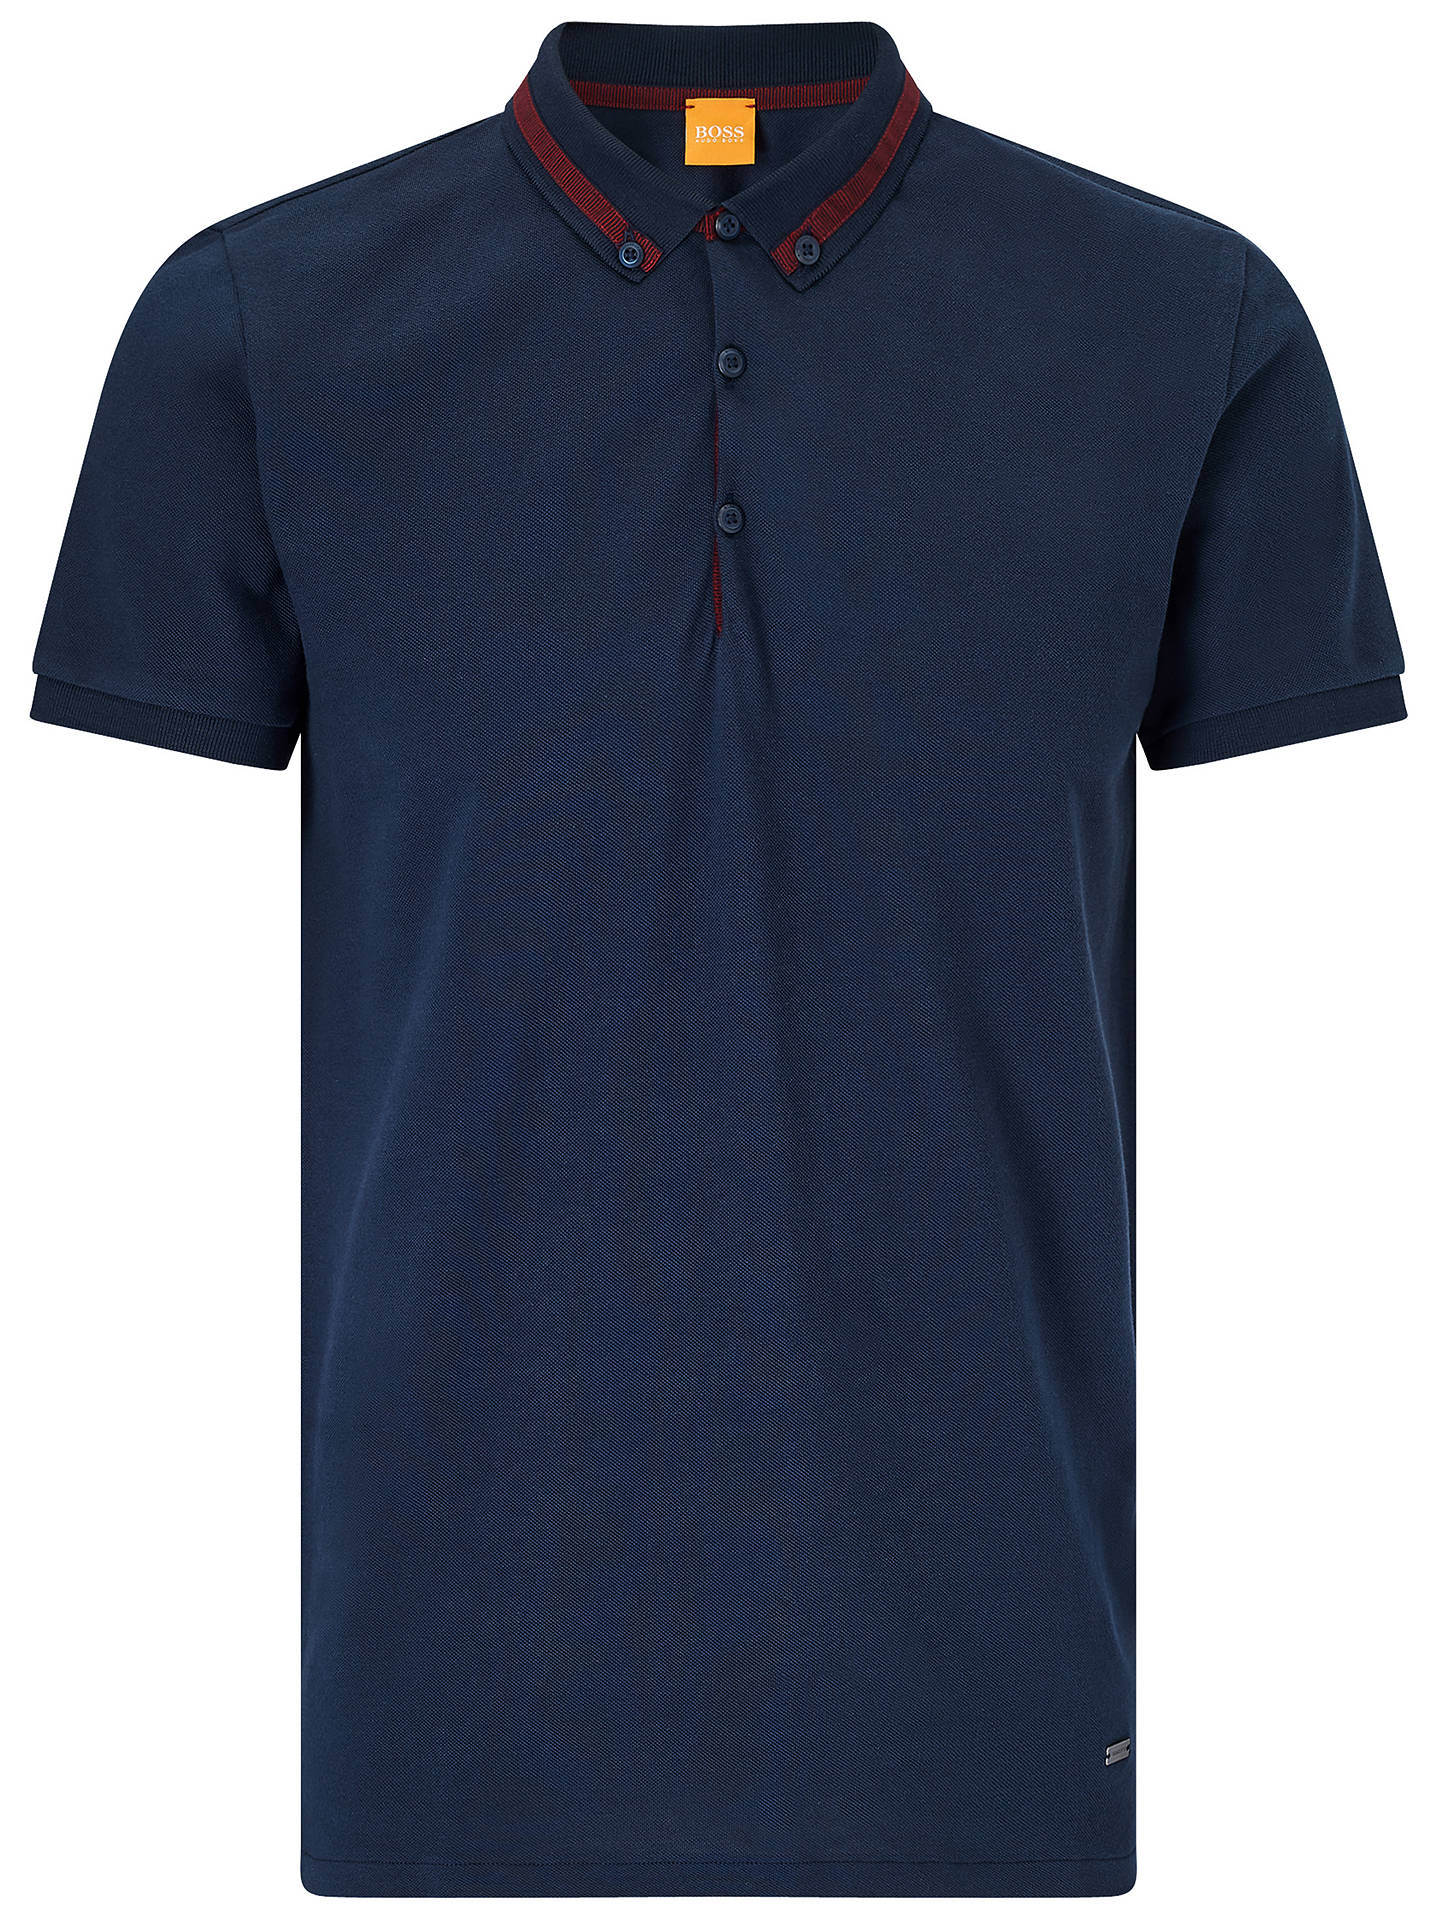 BOSS Orange Pejo Regular Fit Polo Shirt, Dark Blue at John Lewis & Partners